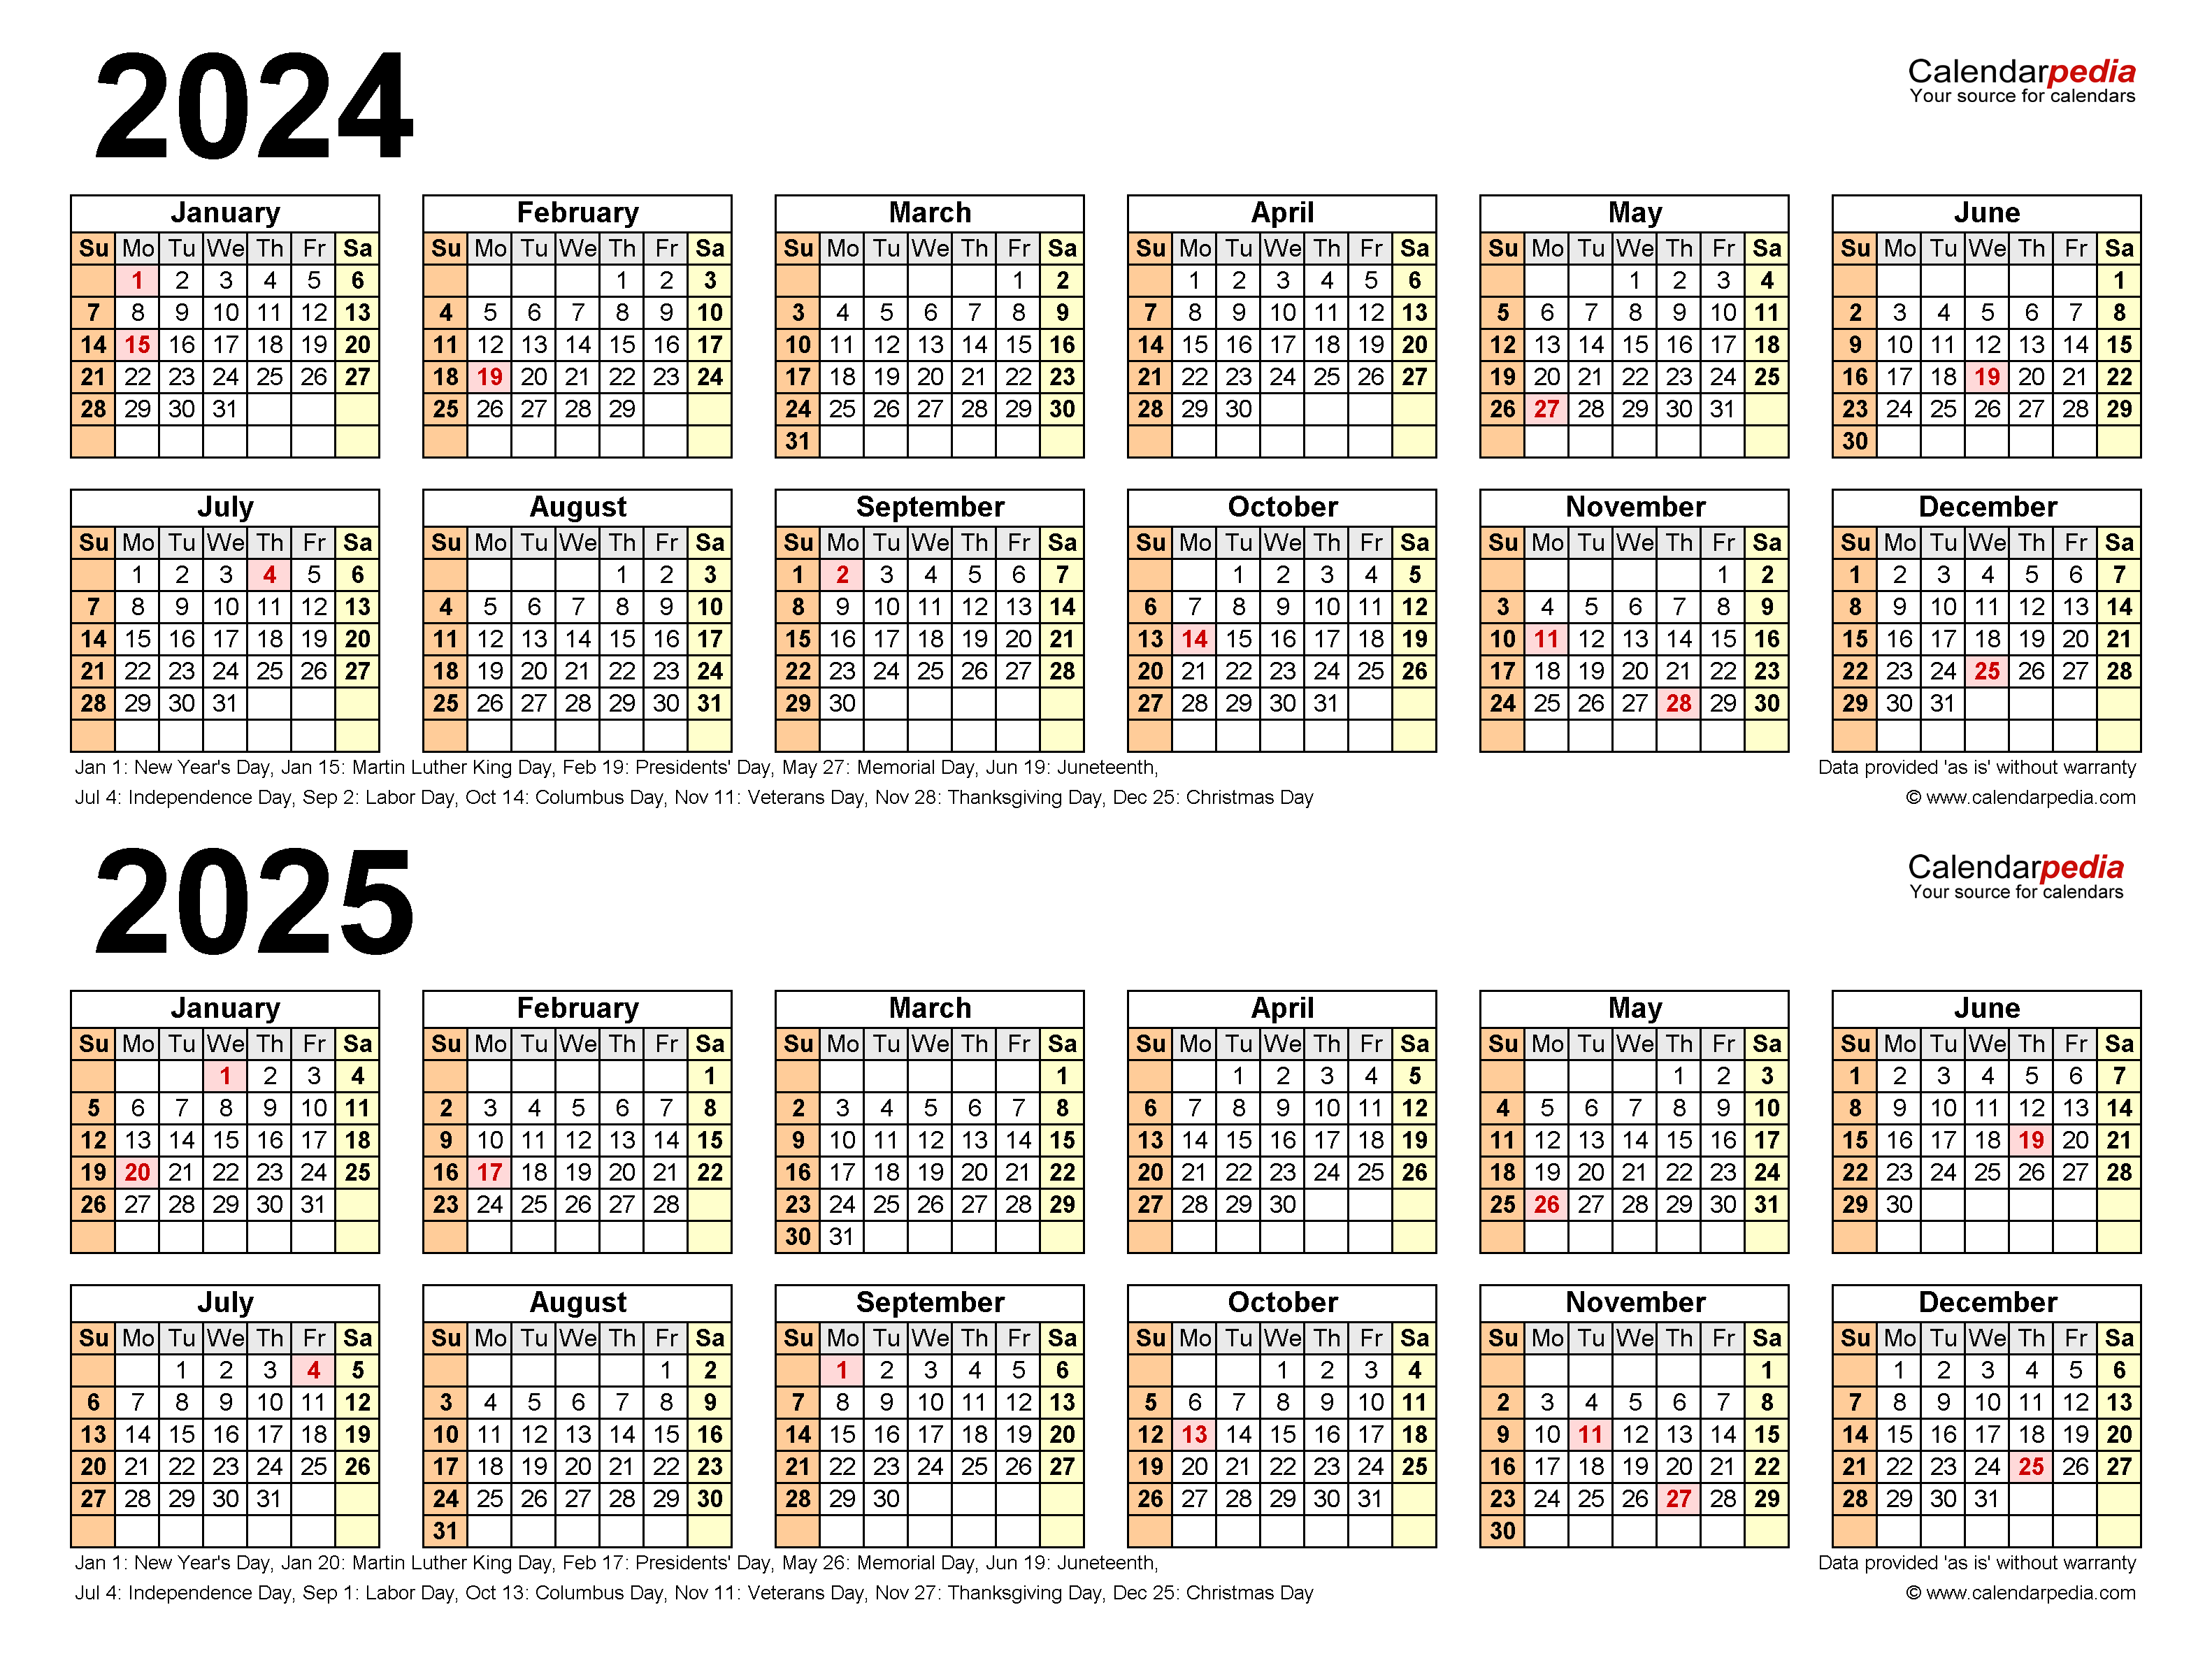 Gisd 2025 Calendar Calculator Using - Donny Gloriana